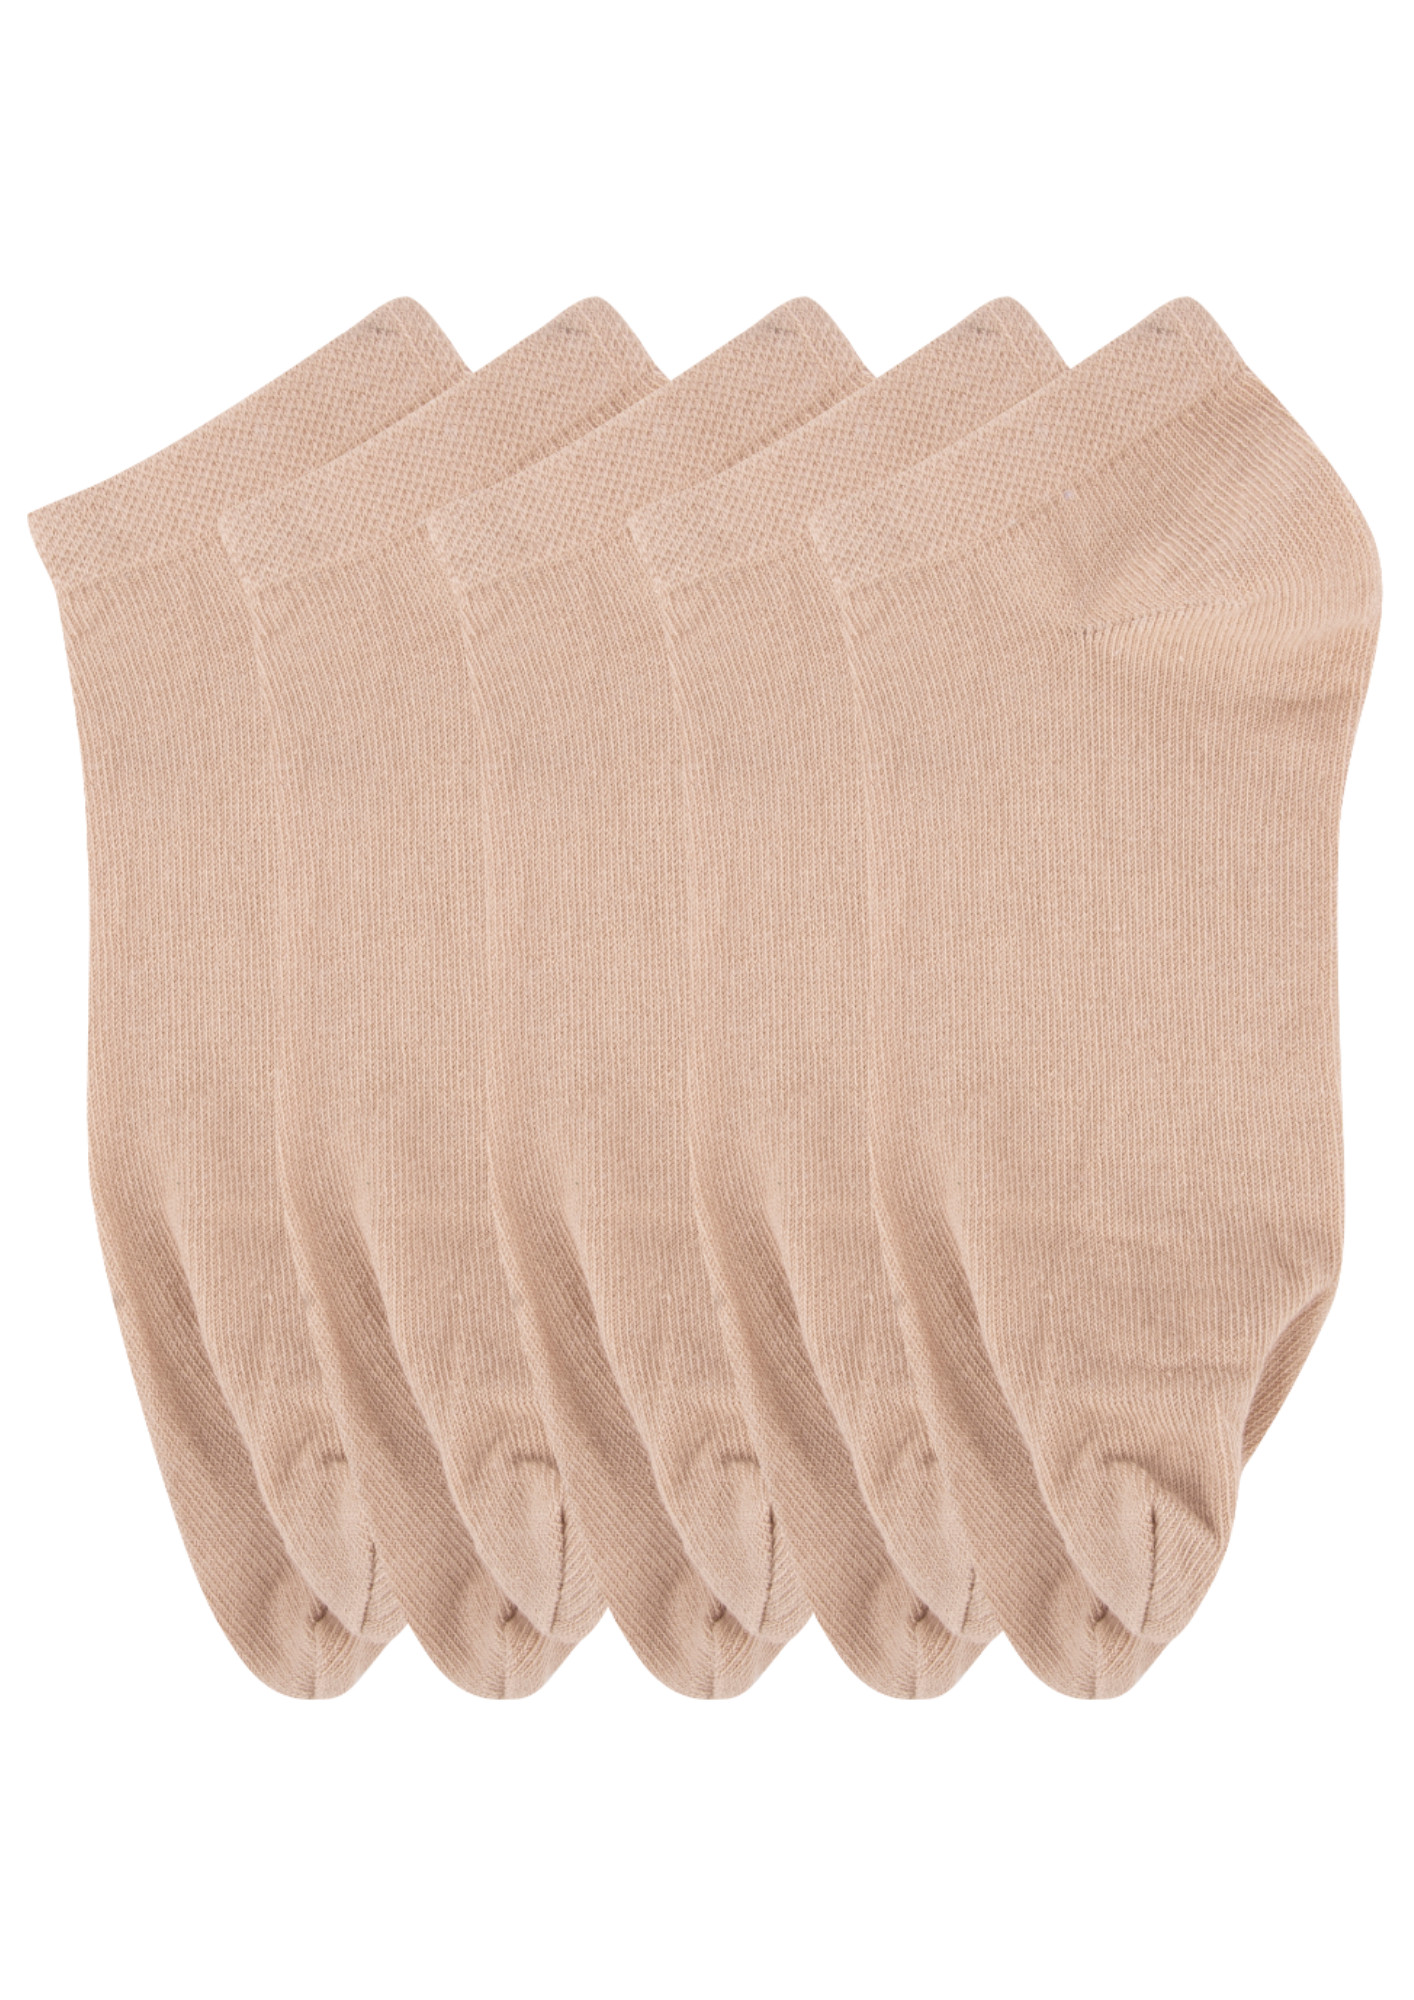 NEXT2SKIN Women Low Ankle Length Cotton Thumb Socks (Pack of 5) (Skin:Skin:Skin:Skin:Skin)